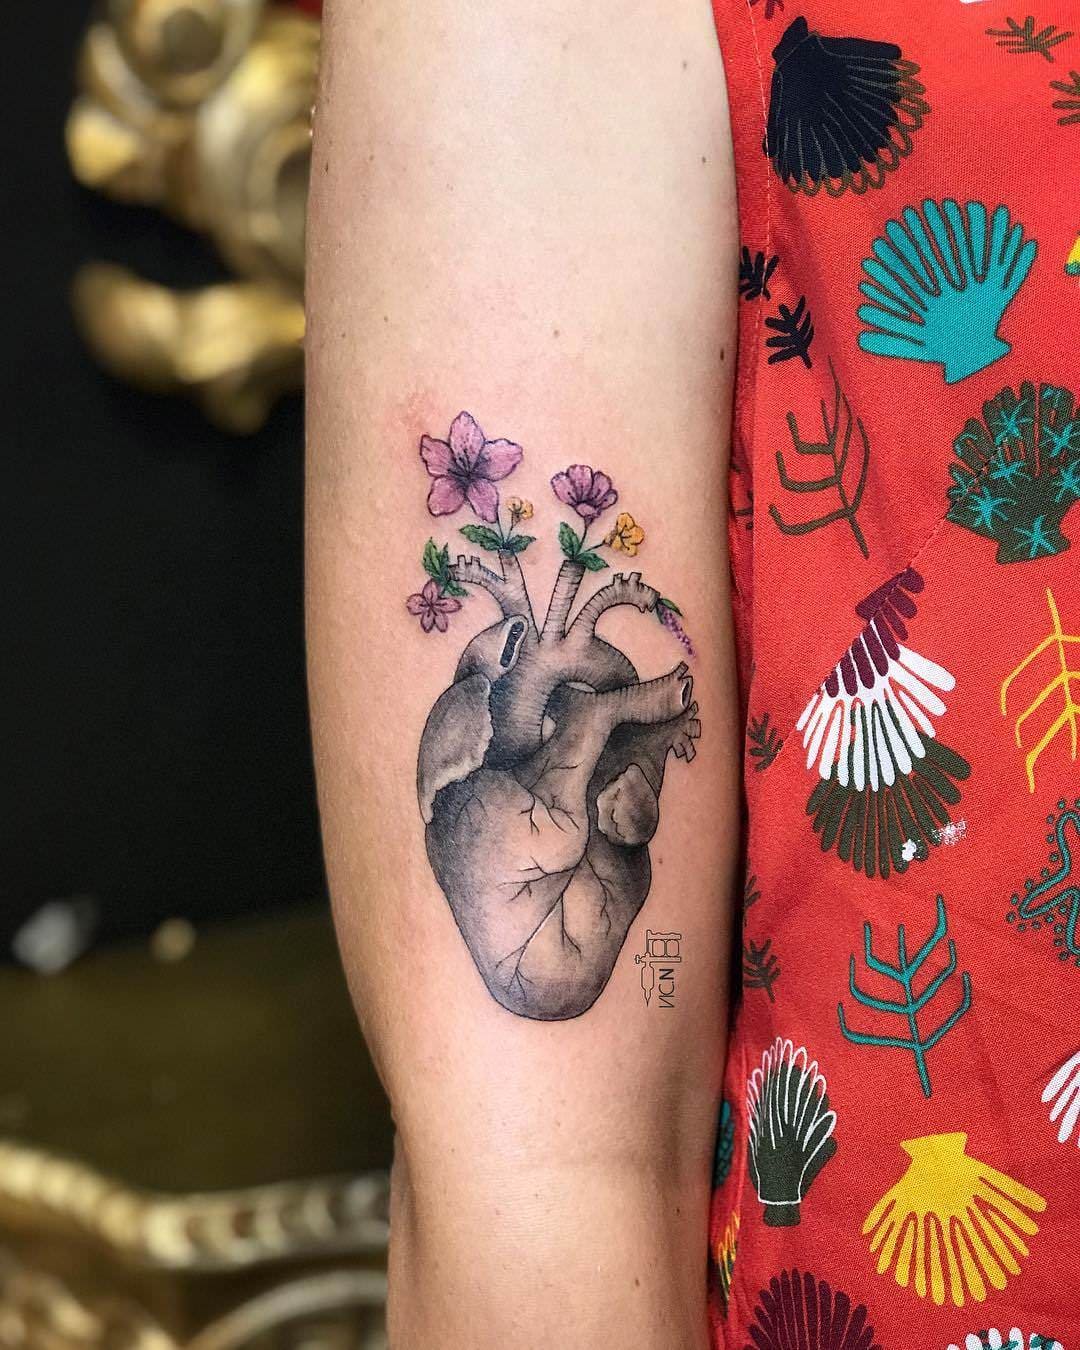 130 Heart Tattoo Ideas That Will Capture Your Heart - Wild Tattoo Art